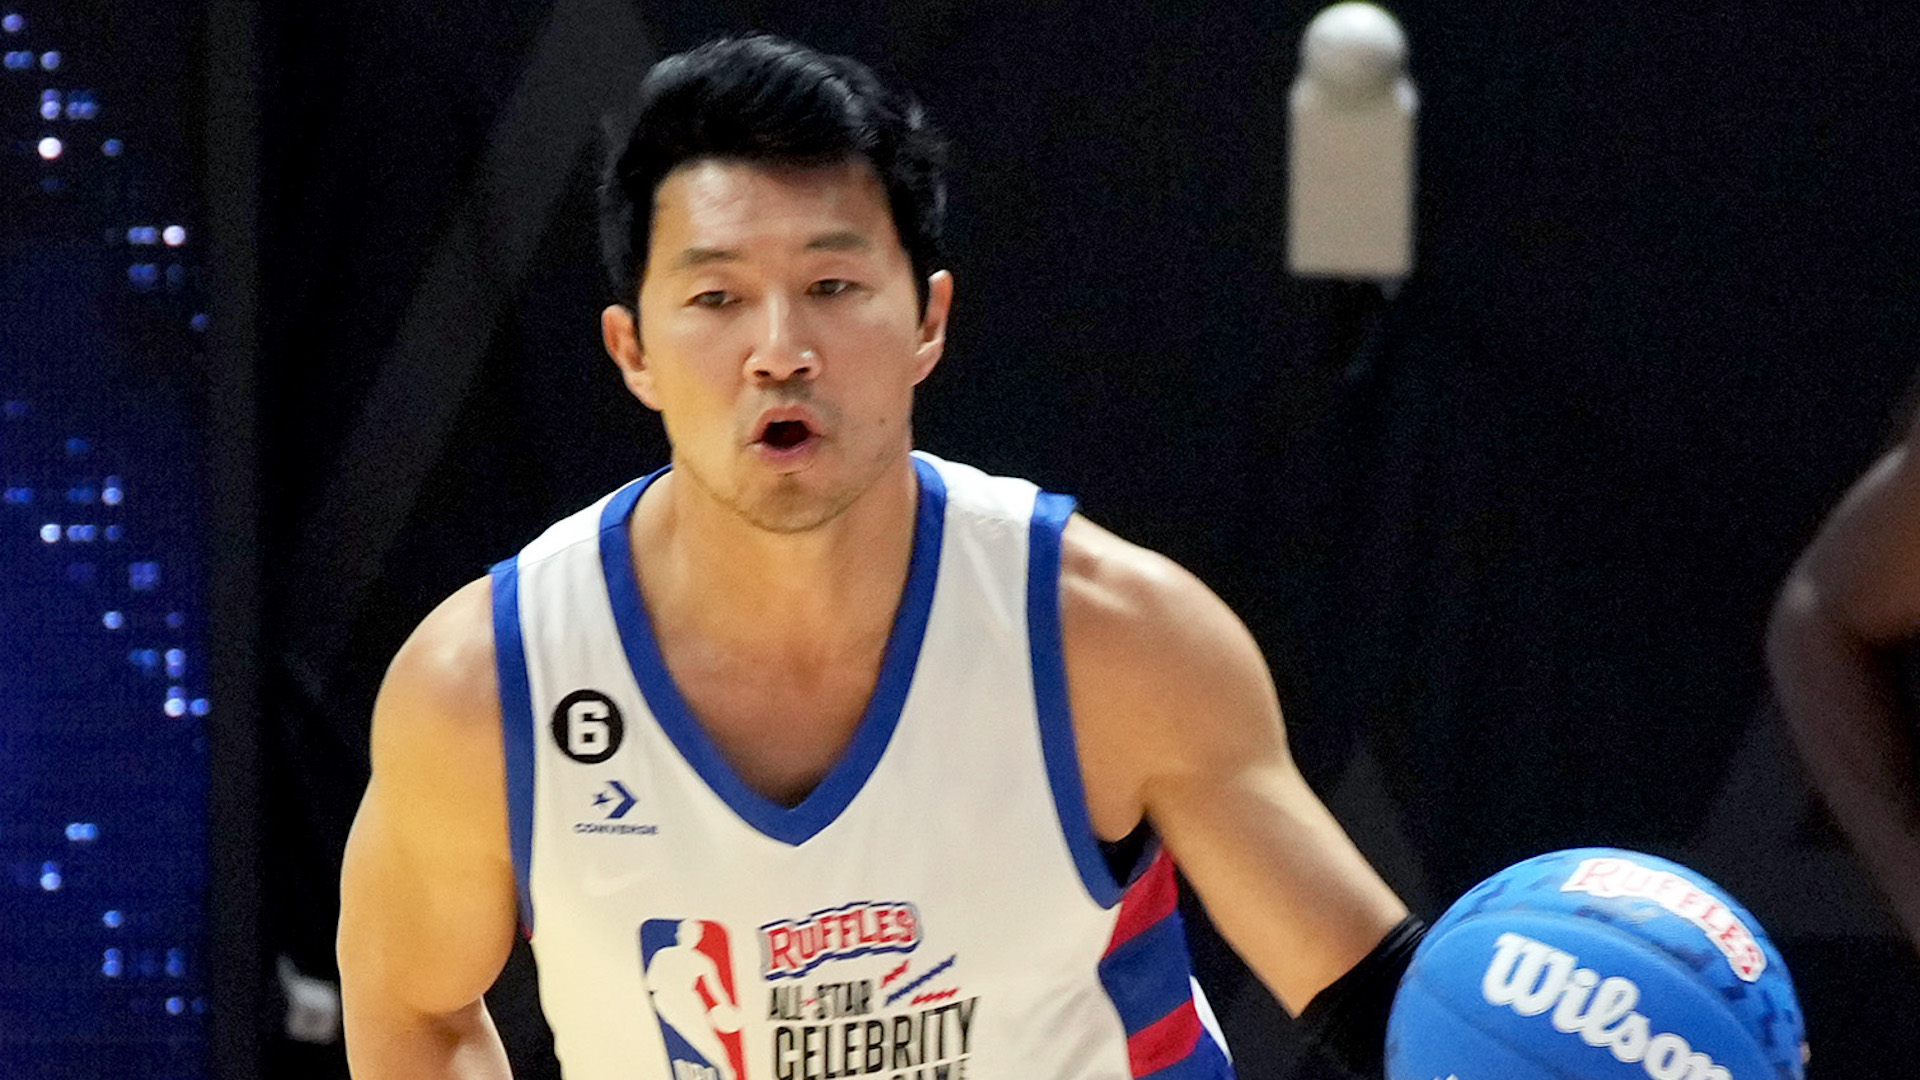 NBA All-Star Weekend: Simu Liu Criticizes Celebrity Look-Alike Segment